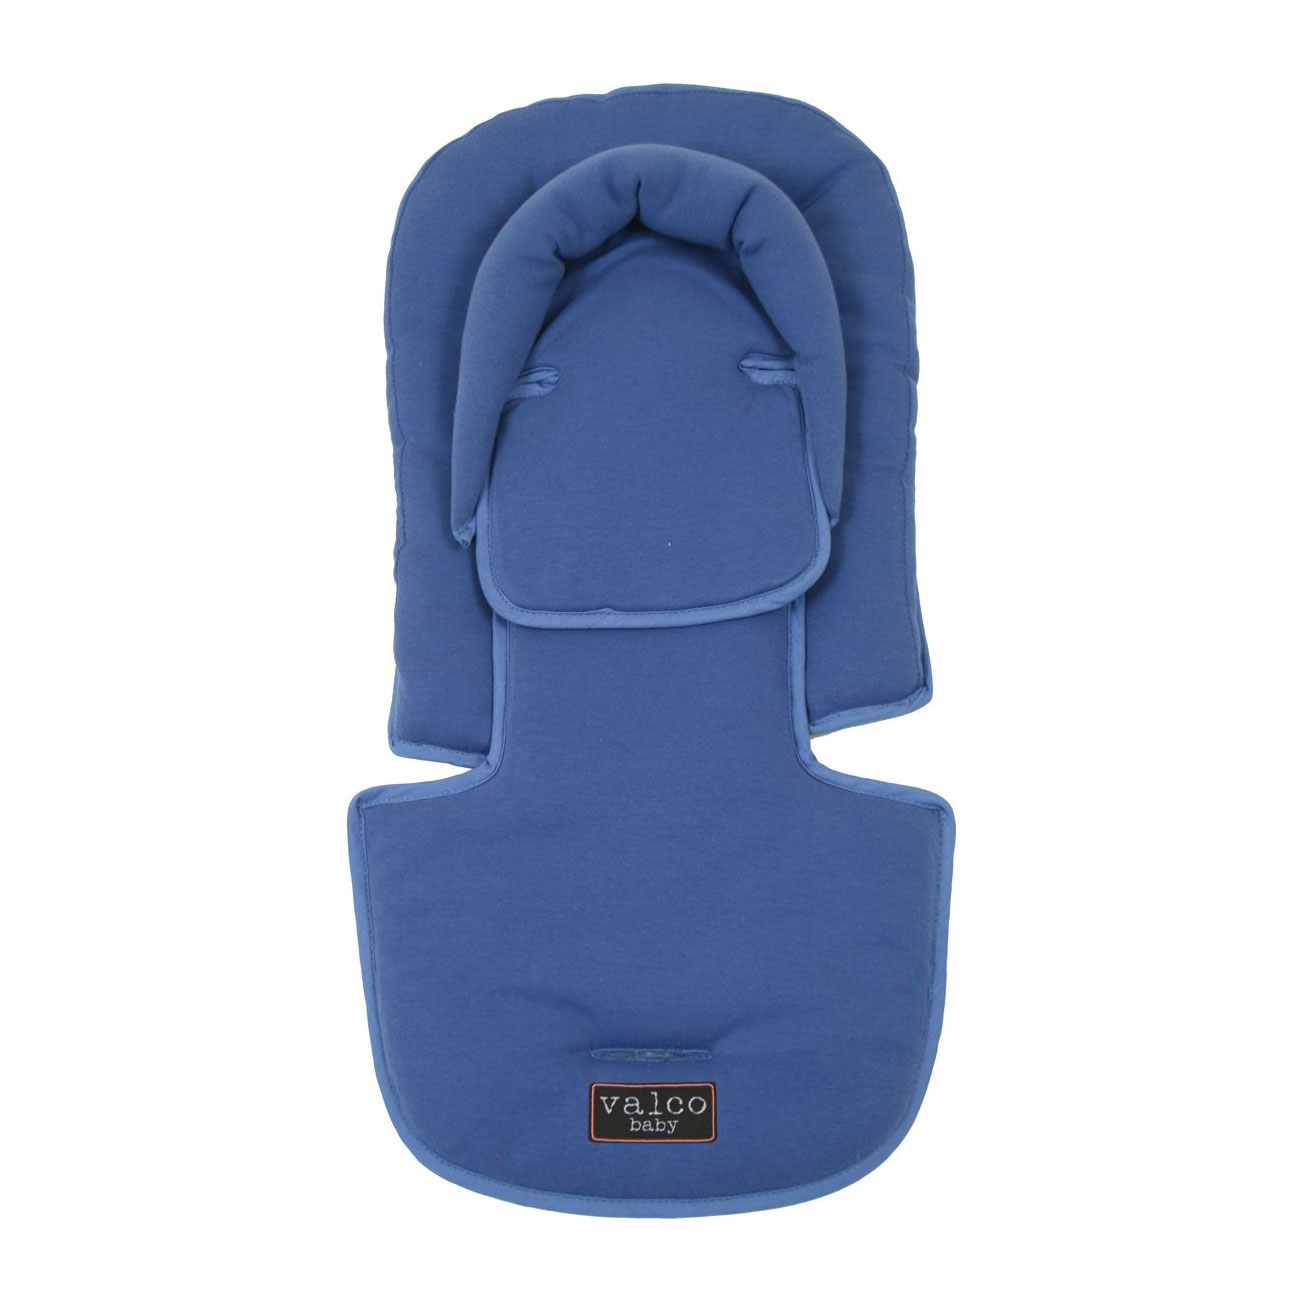 Вкладыш All Sorts Seat Pad / Blue Valco Baby вкладыш для новорожденного 4moms maroon